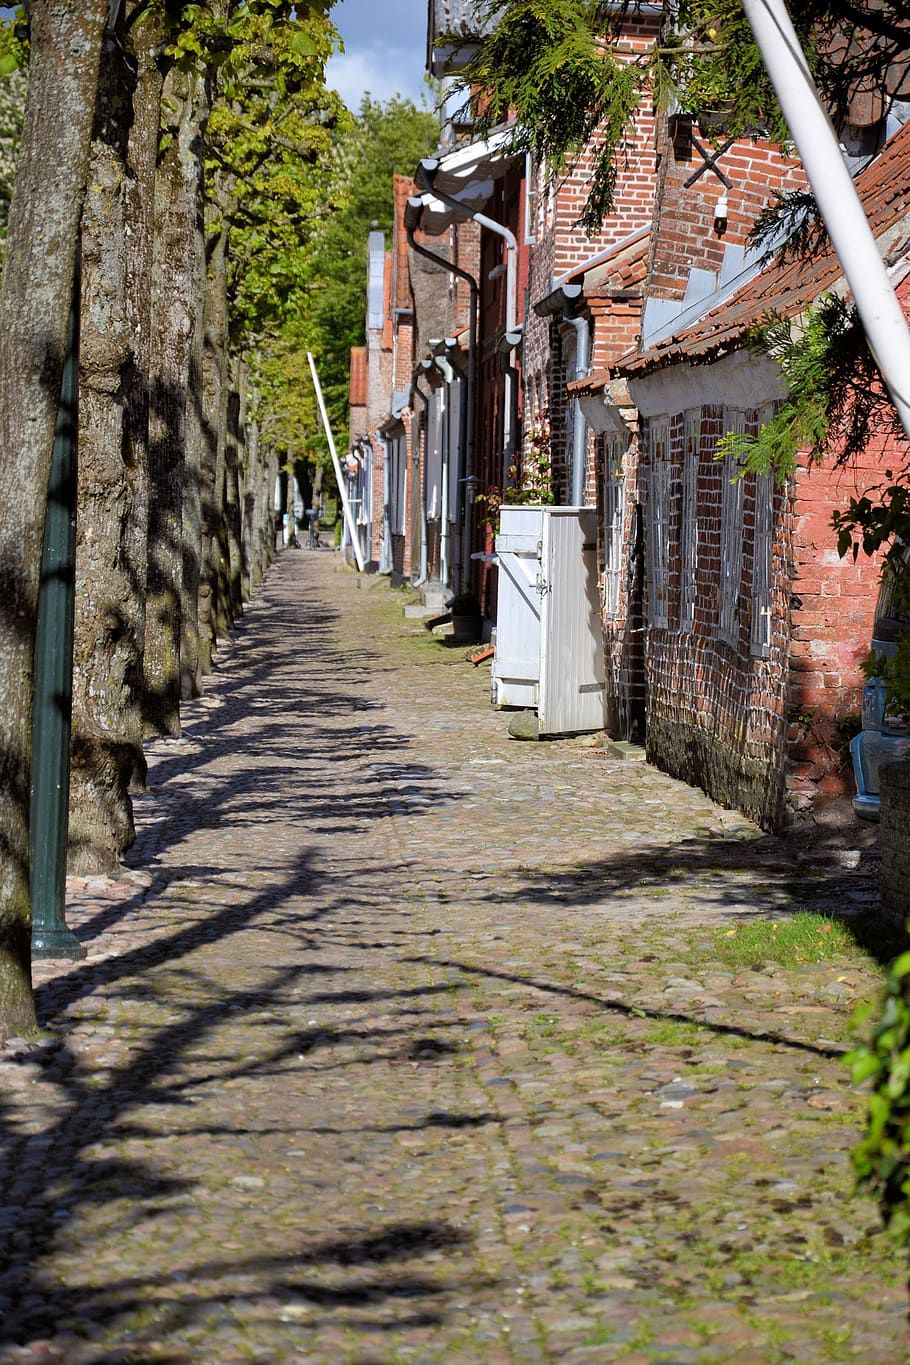 møgeltønder, tønder, denmark, jutland, north sea, castle street, cobblestones, brick, old, row of houses